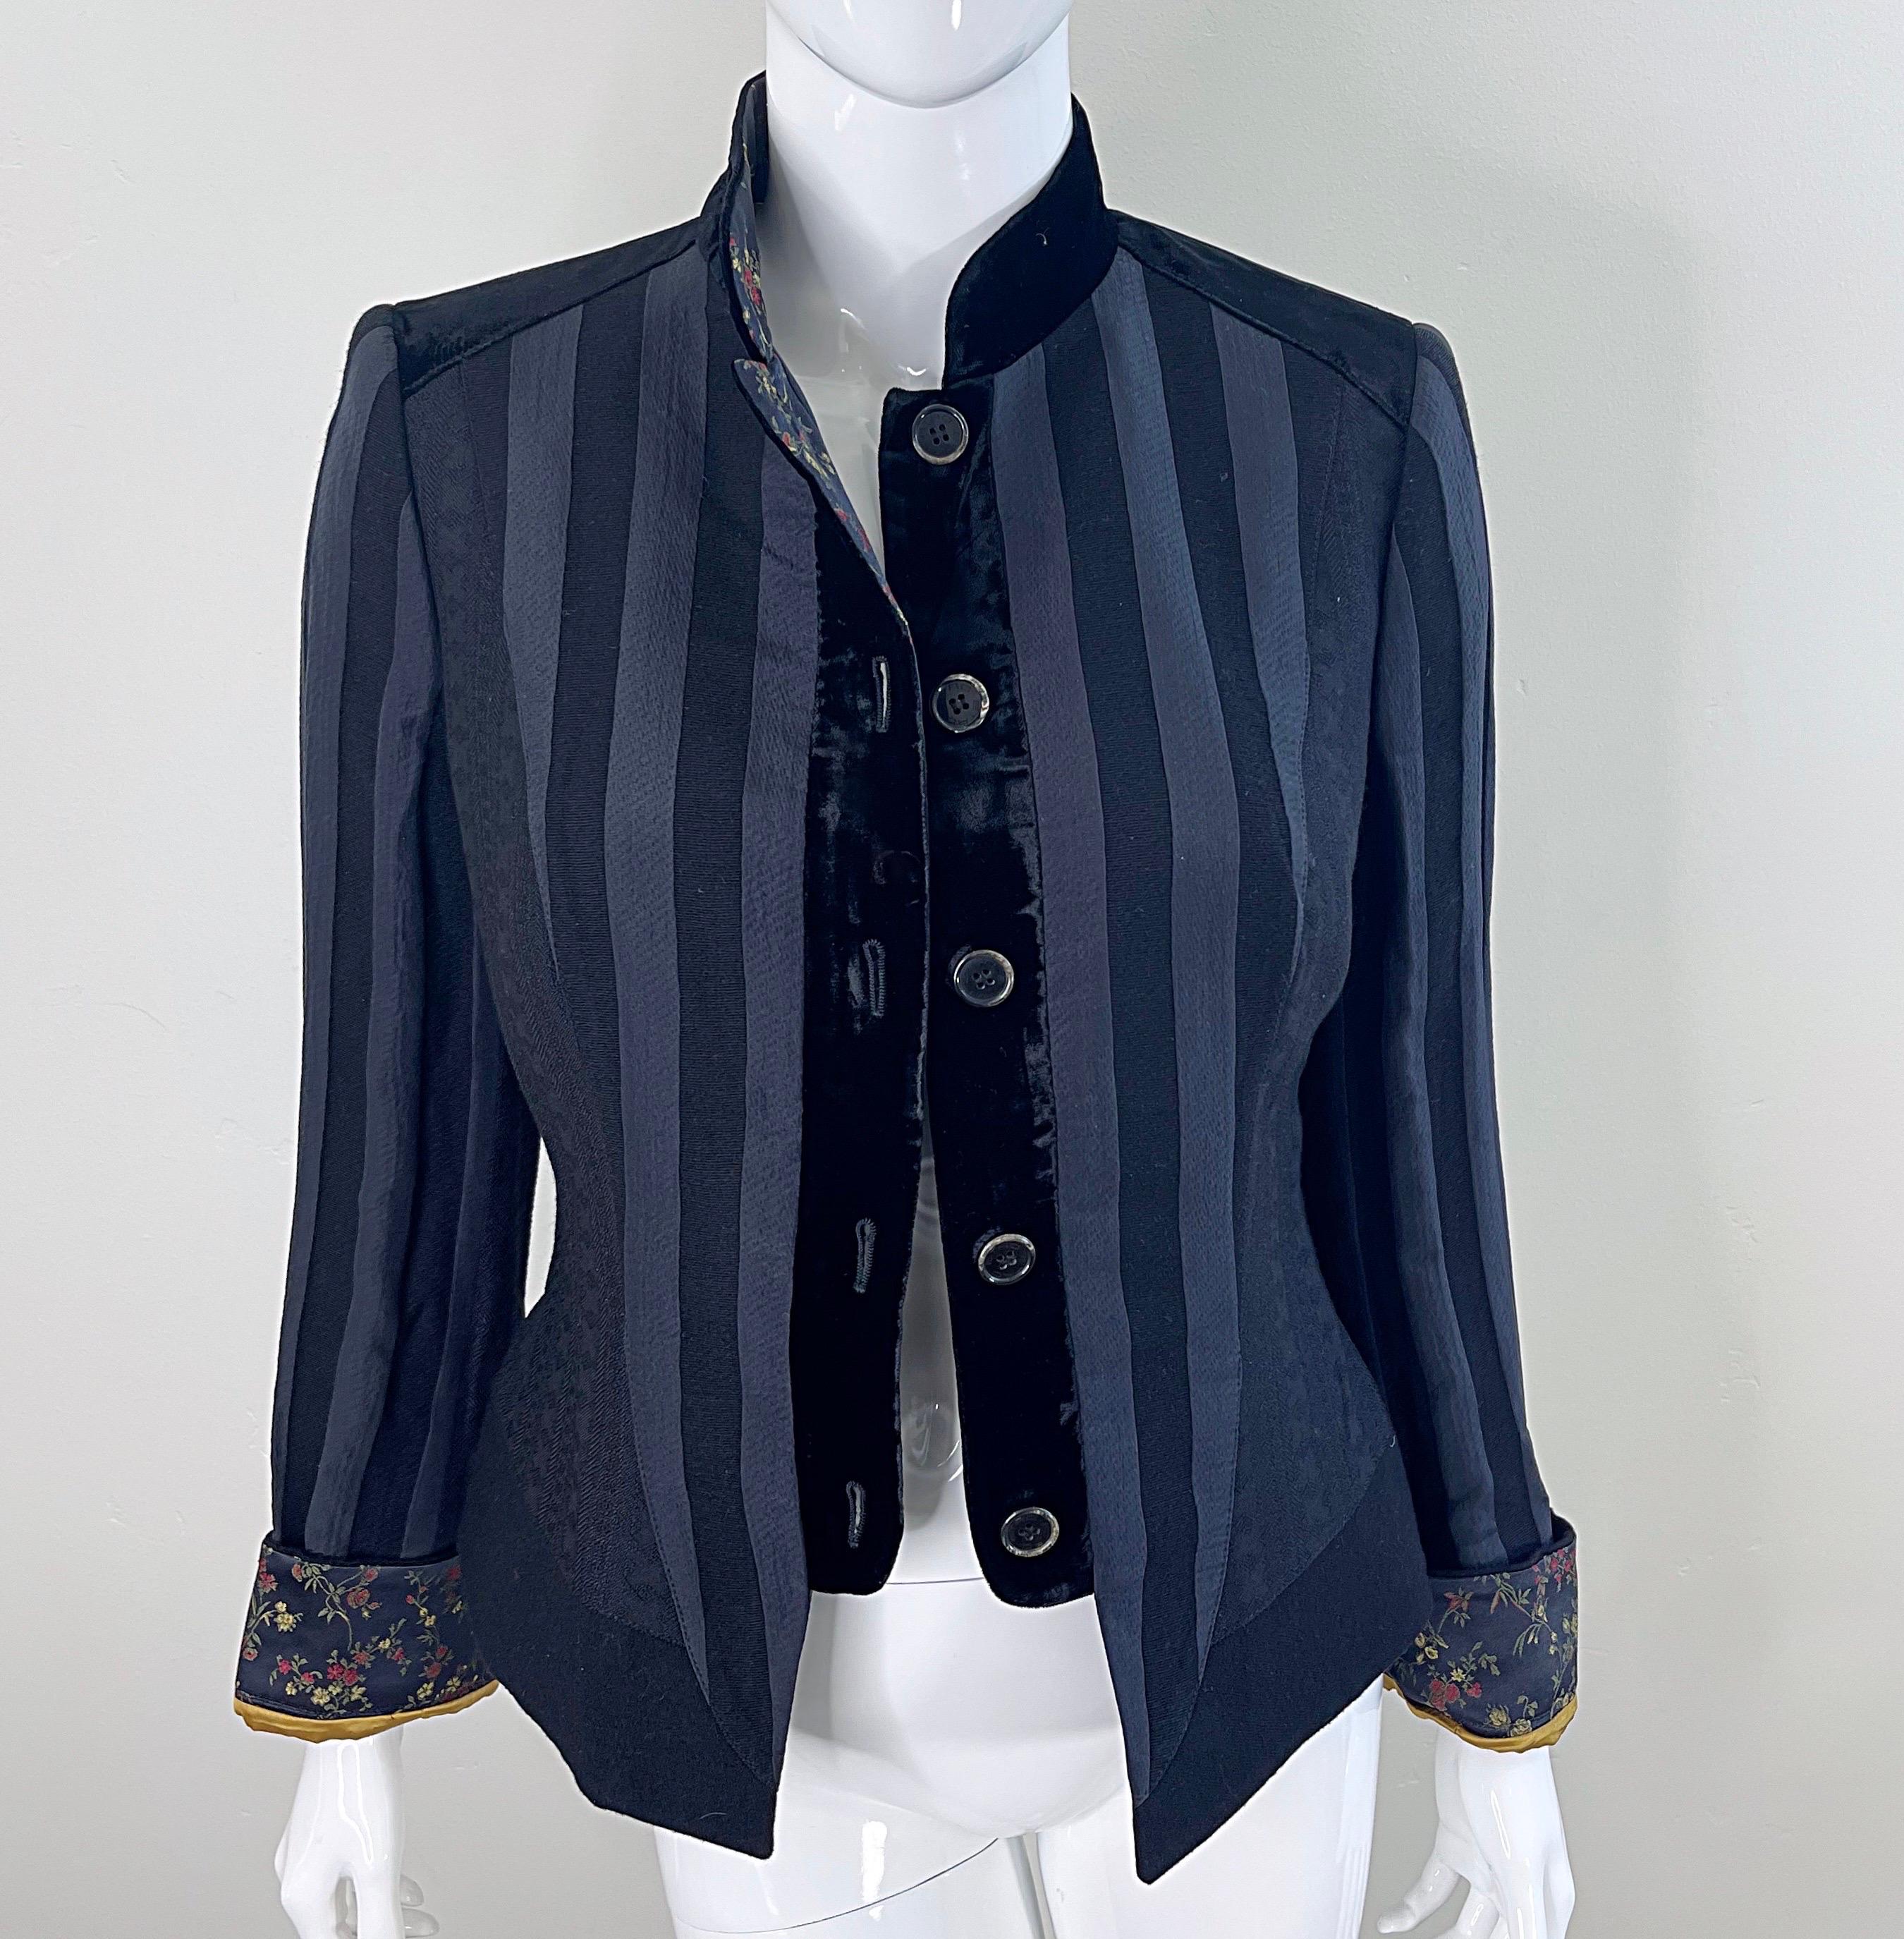 Etro Black Silk Blend Size 44 / US 8 Military Inspired Jacket w/ Flower Cuffs For Sale 11